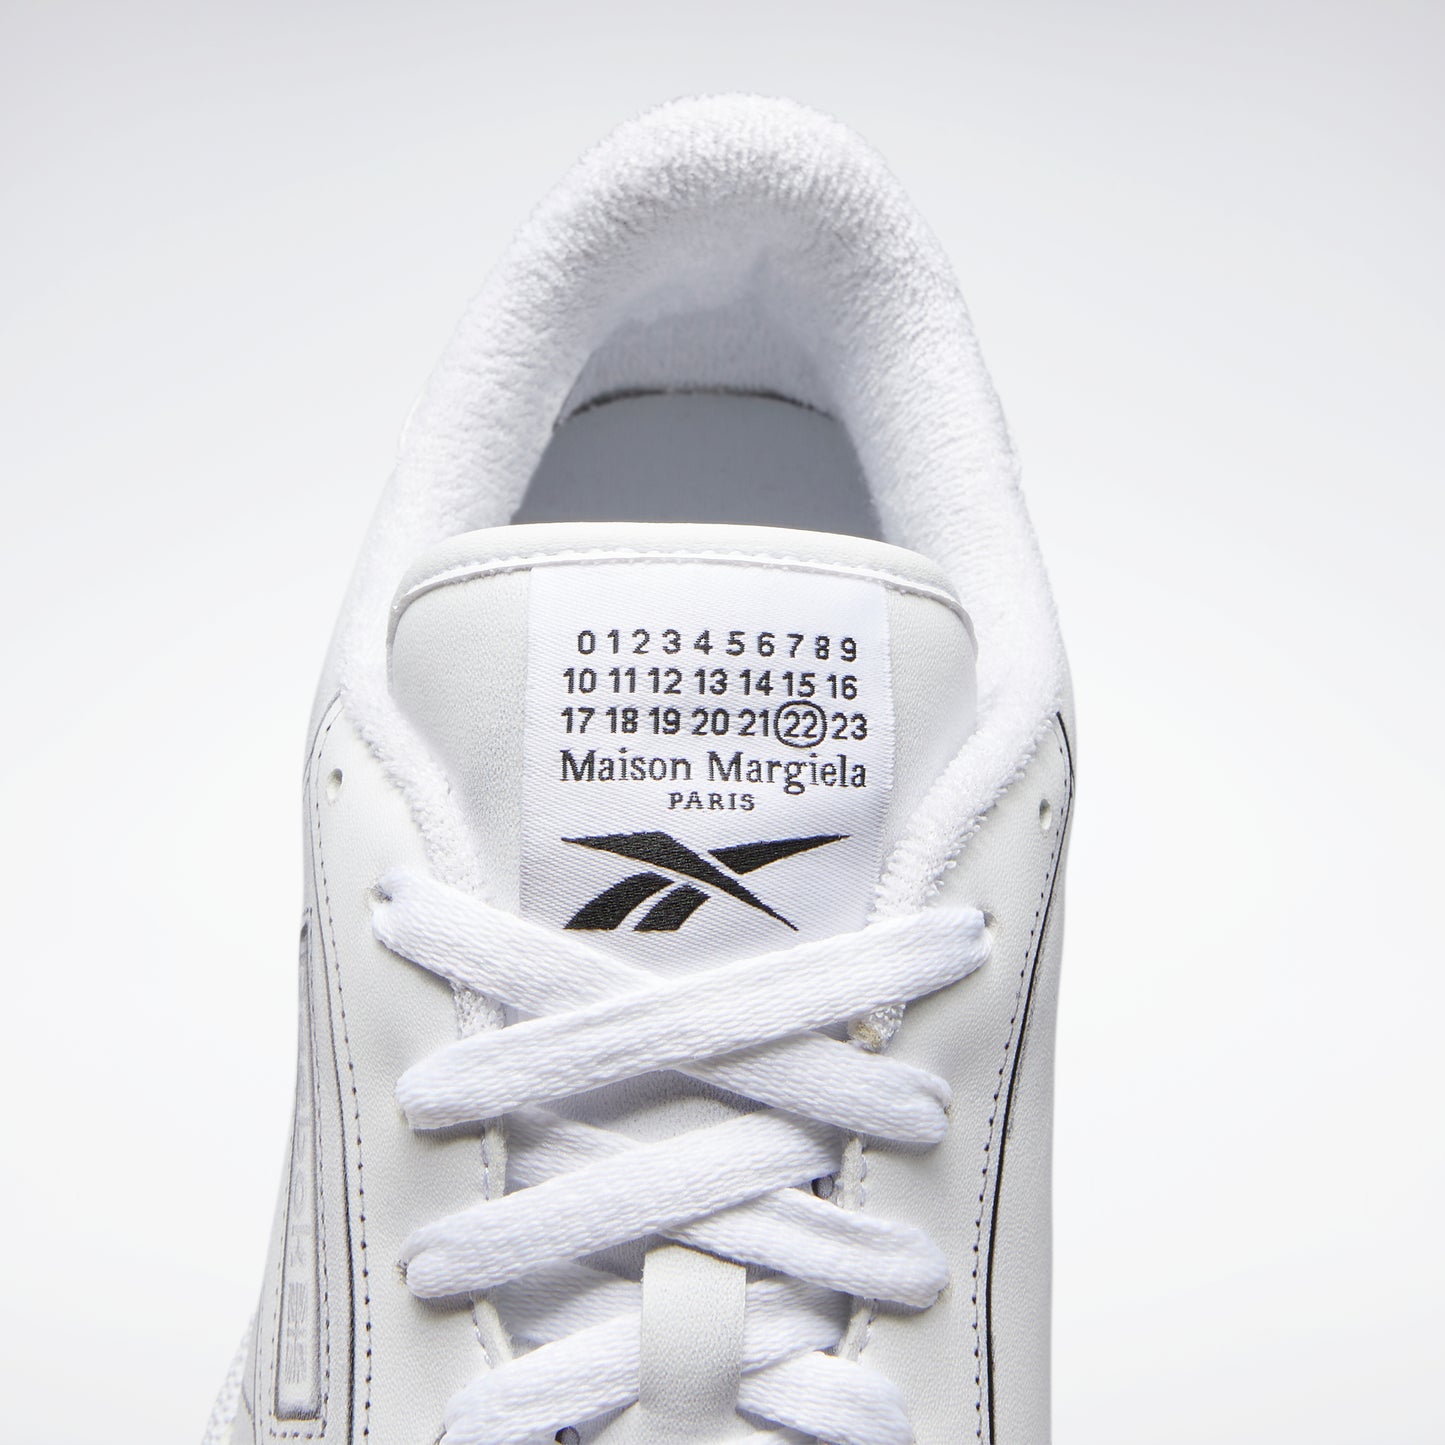 Chaussures Reebok Footwear Hommes Maison Margiela Club C Blanc/Noir/Blanc